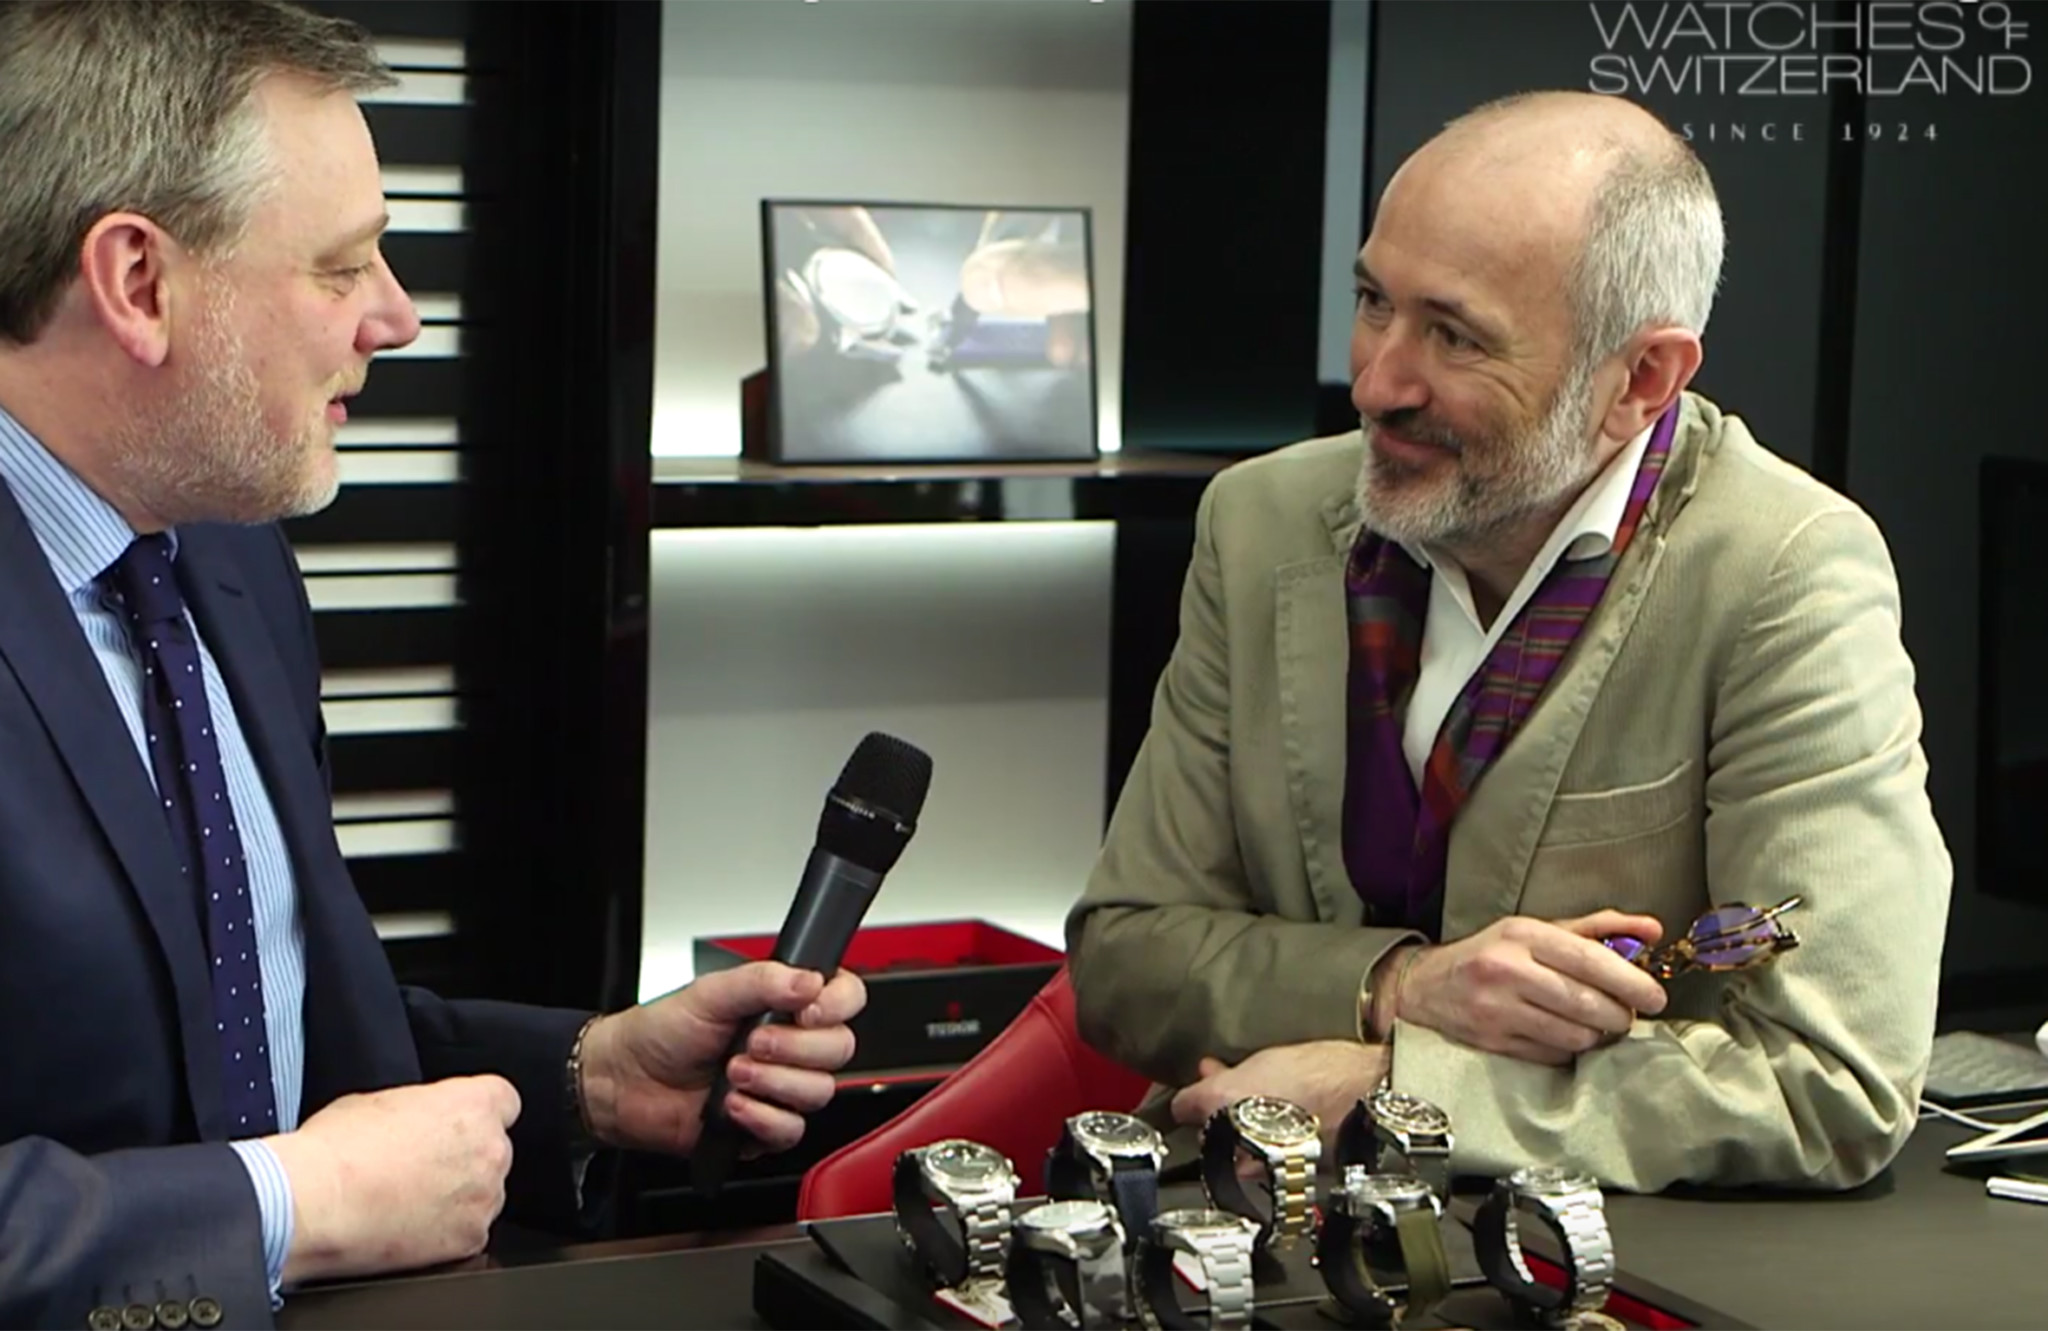 Watches of switzerland tudor interview